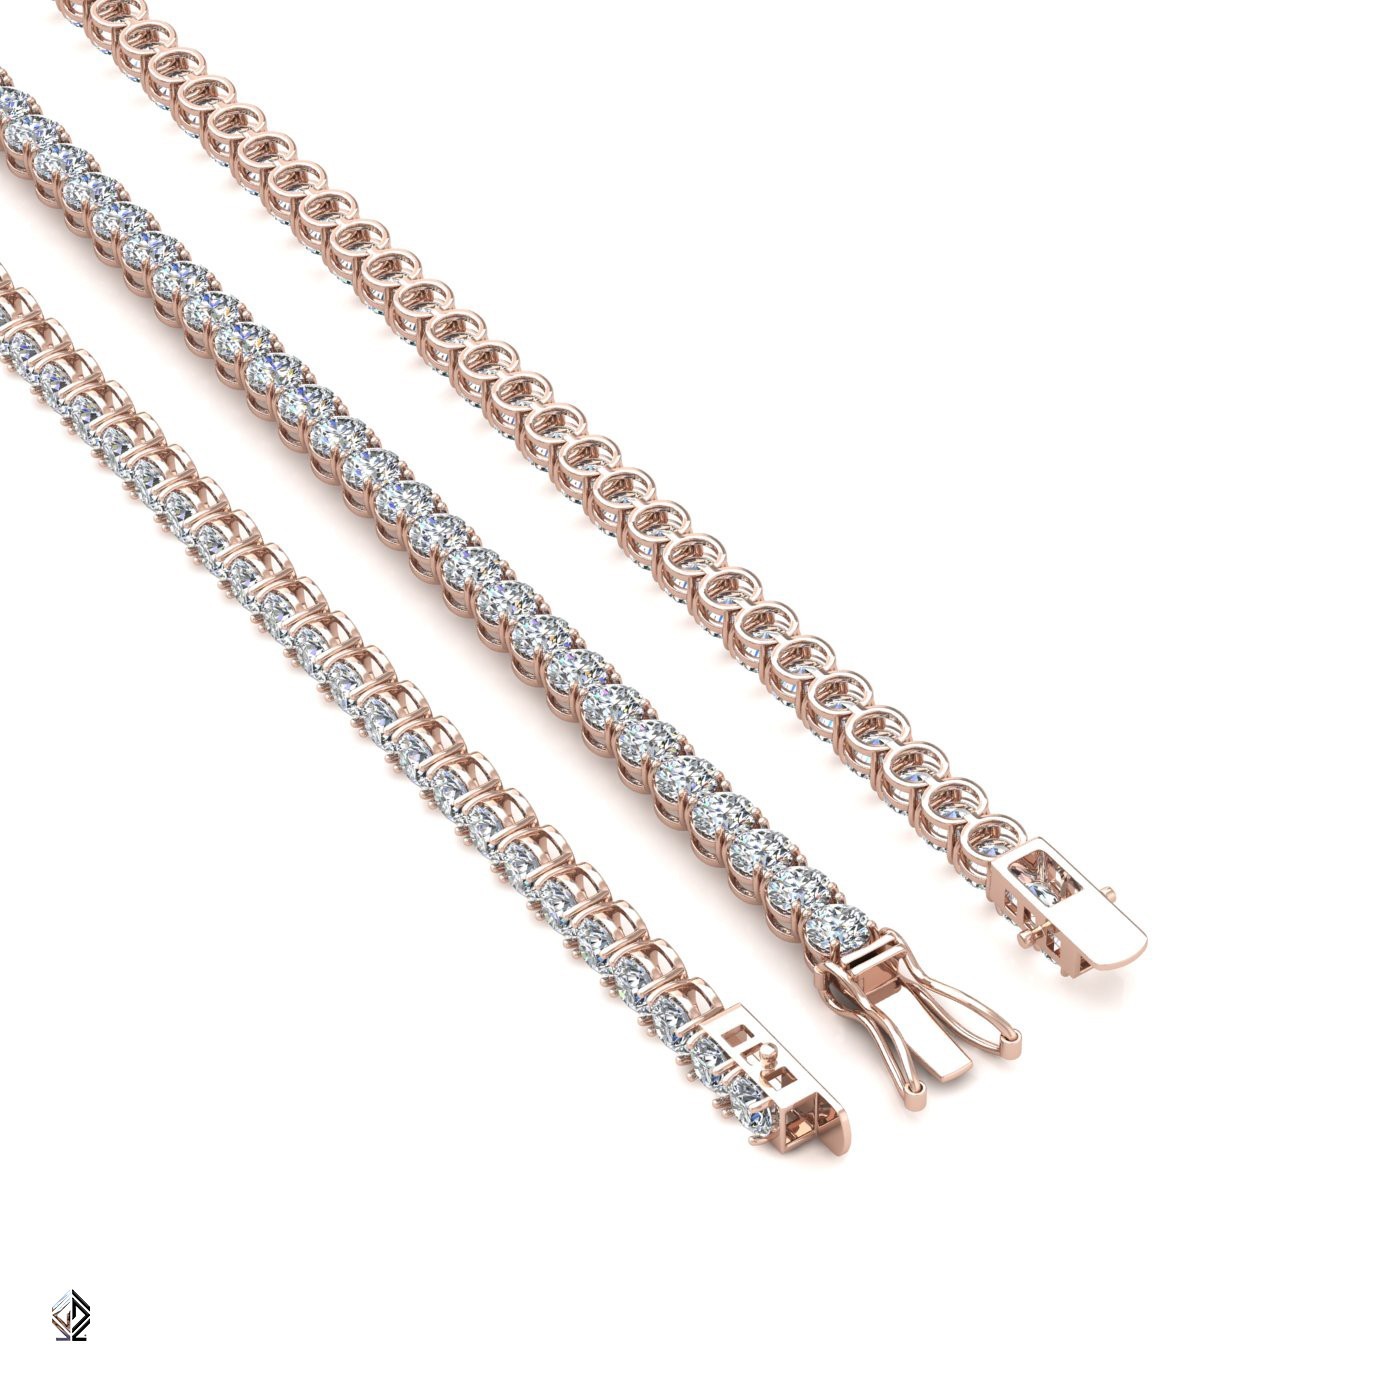 18k rose gold  1.8mm 4 prong round shape diamond tennis bracelet in round setting